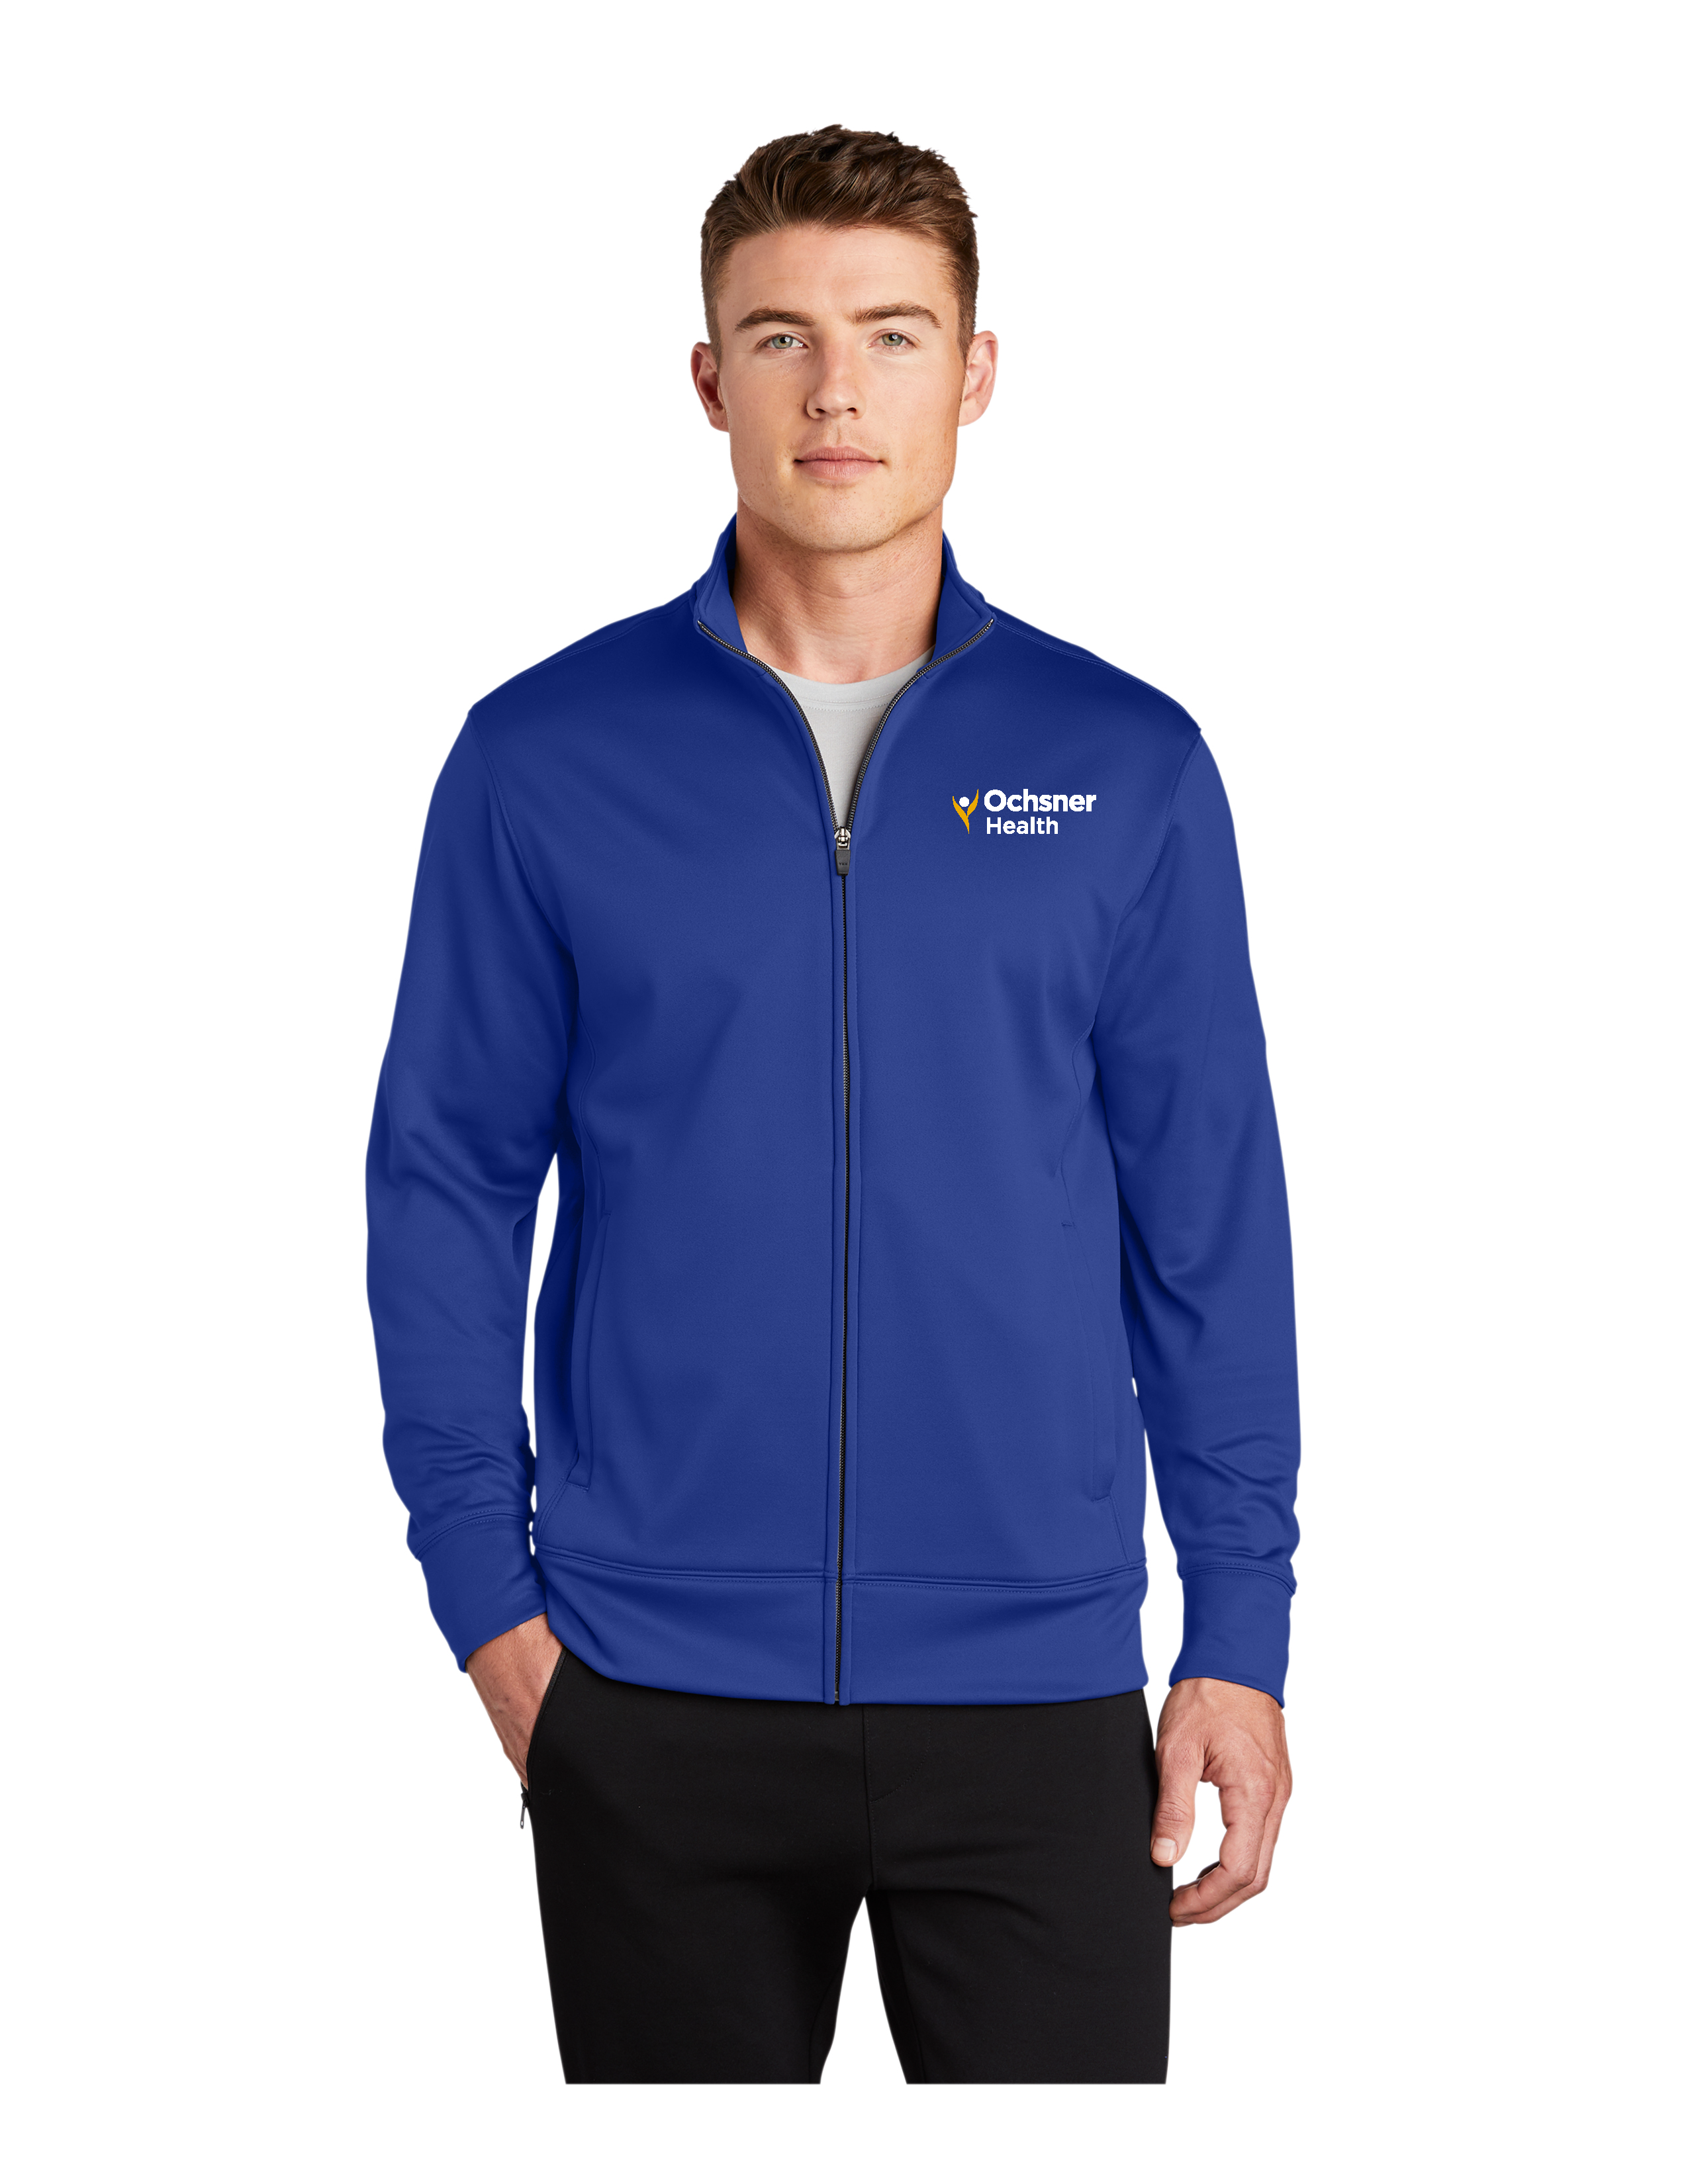 Men's Sportwick Fleece Jacket, , large image number 3